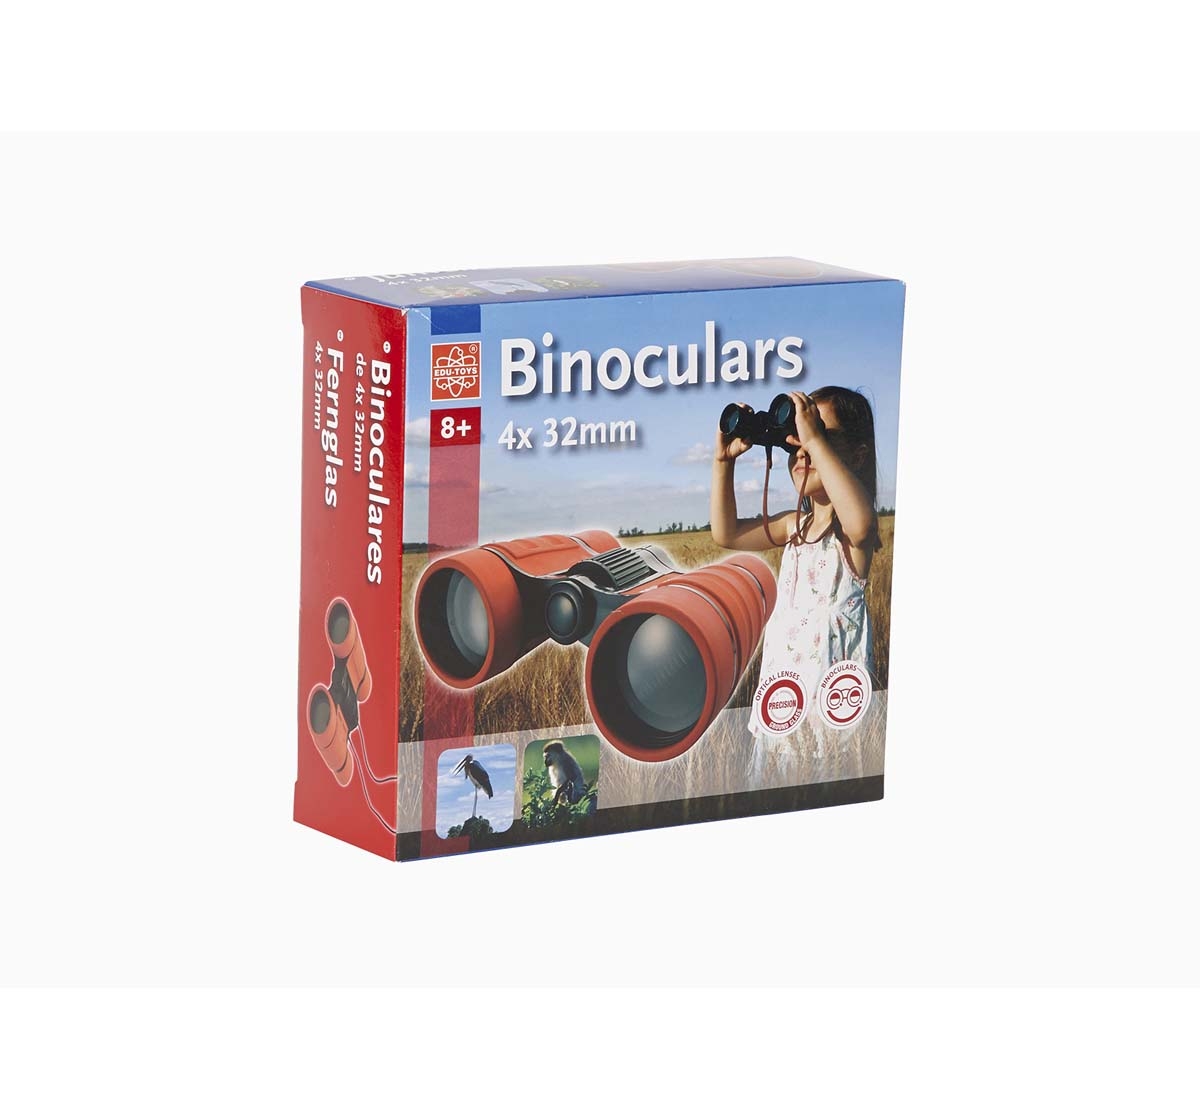 Eduscience | Eduscience Binoculars - Green Science Equipments for Kids age 8Y+